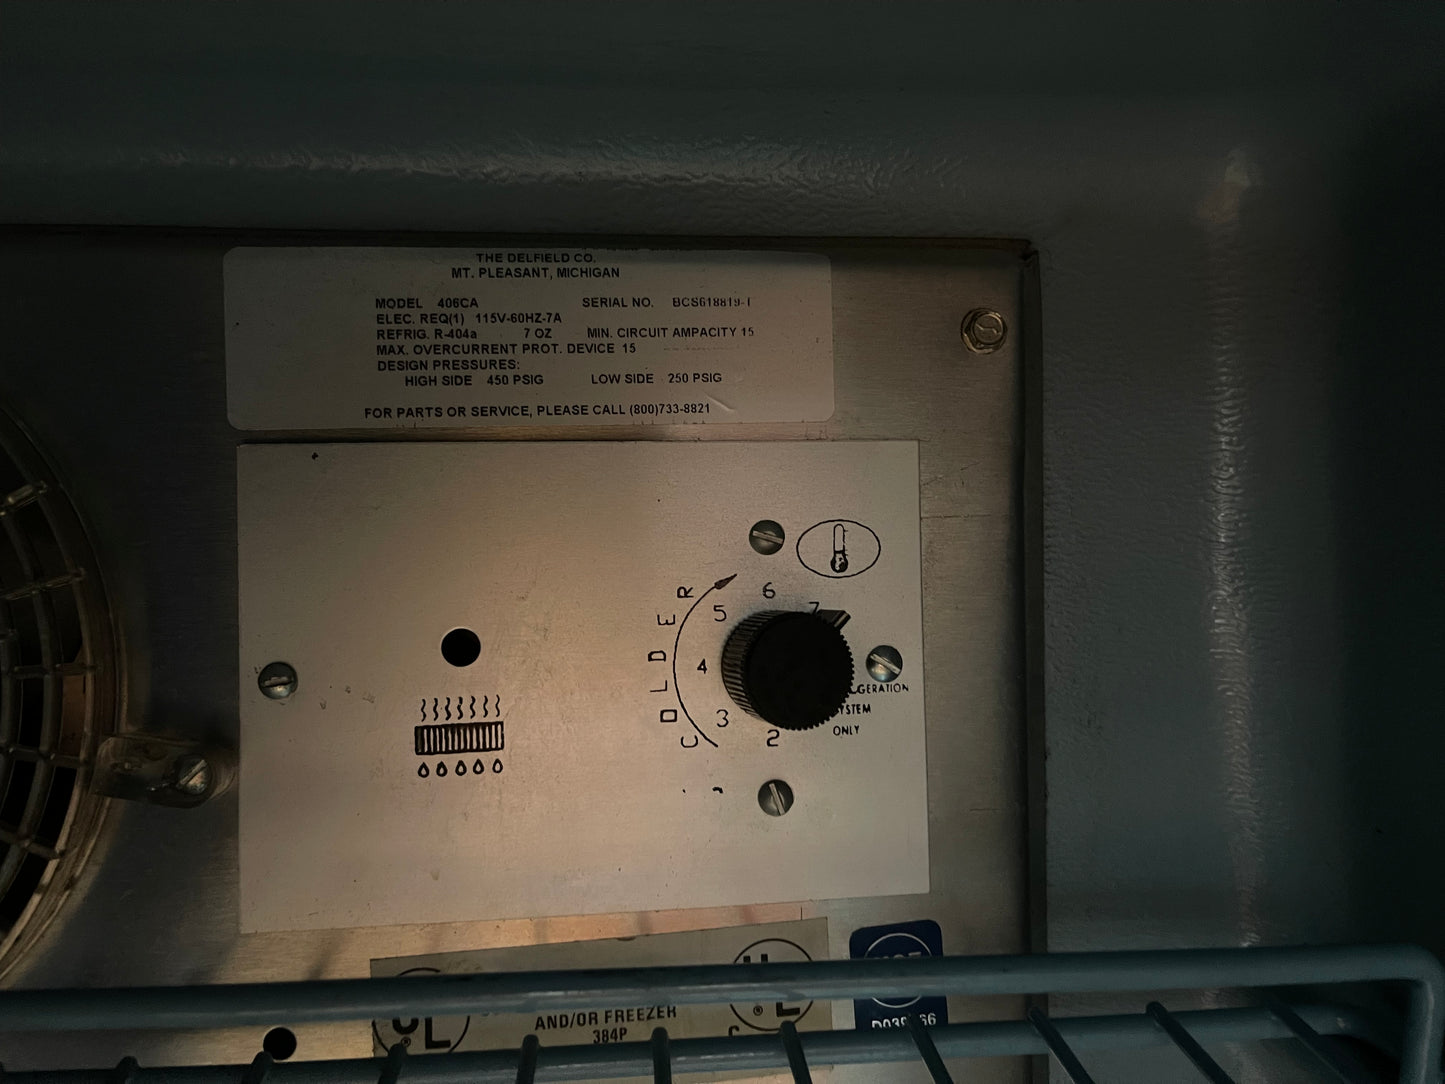 Delfield 406CA Undercounter Refrigerator with Casters 120V